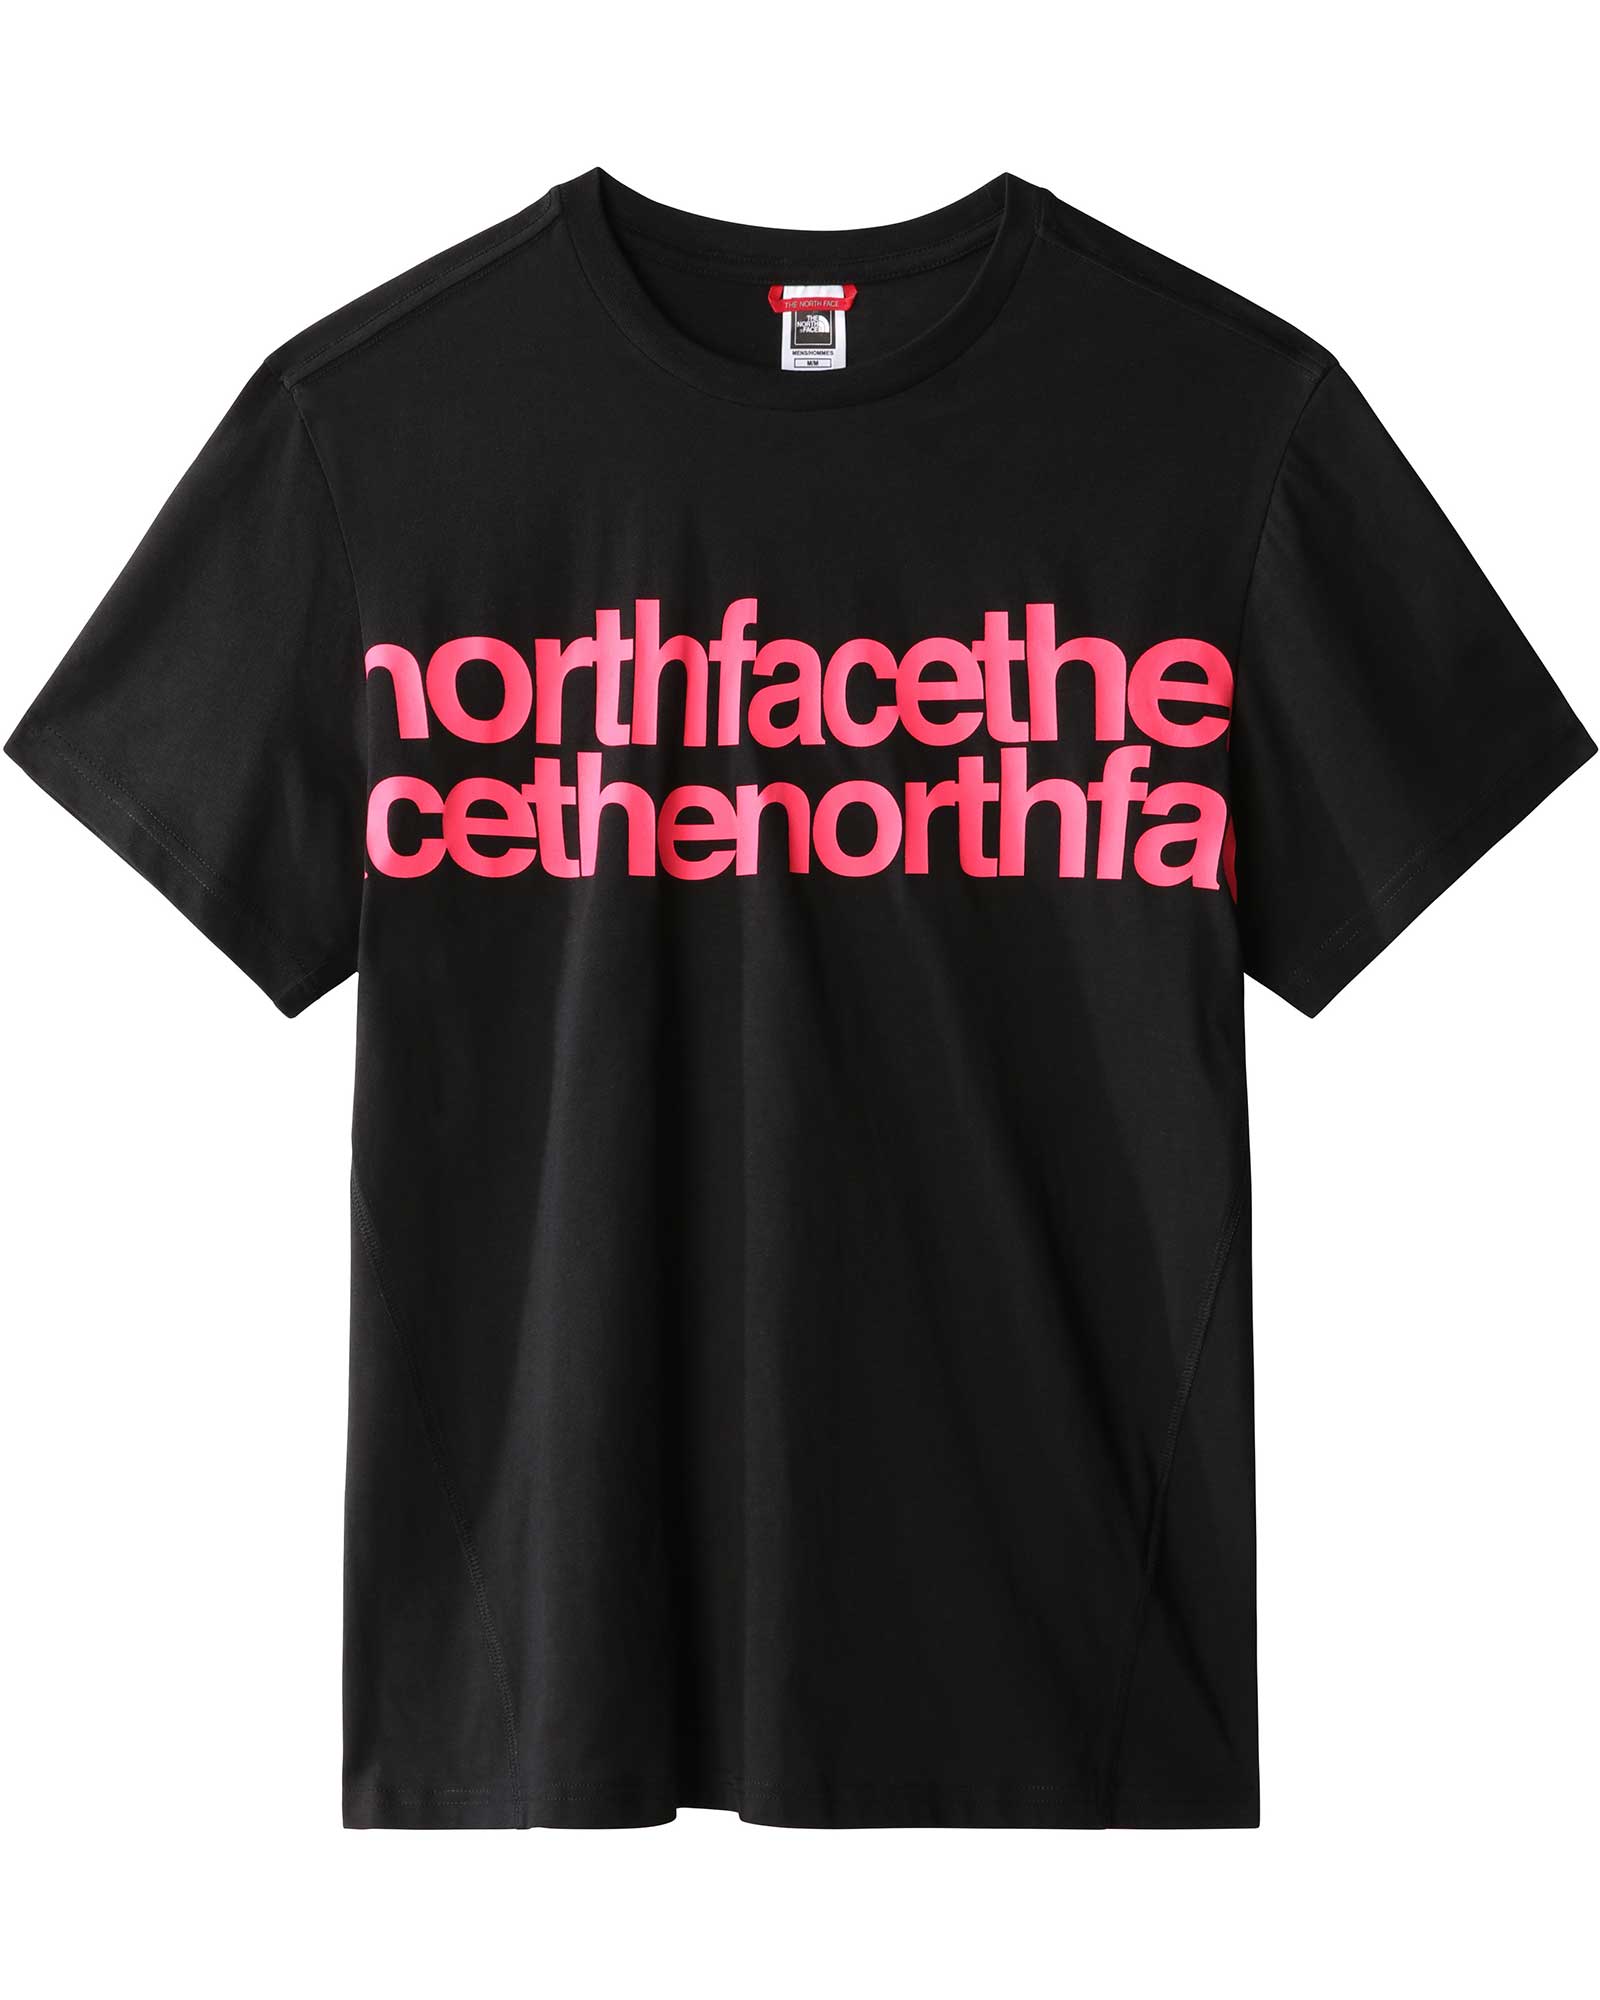 The North Face Coordinates 2 Mens T-shirt